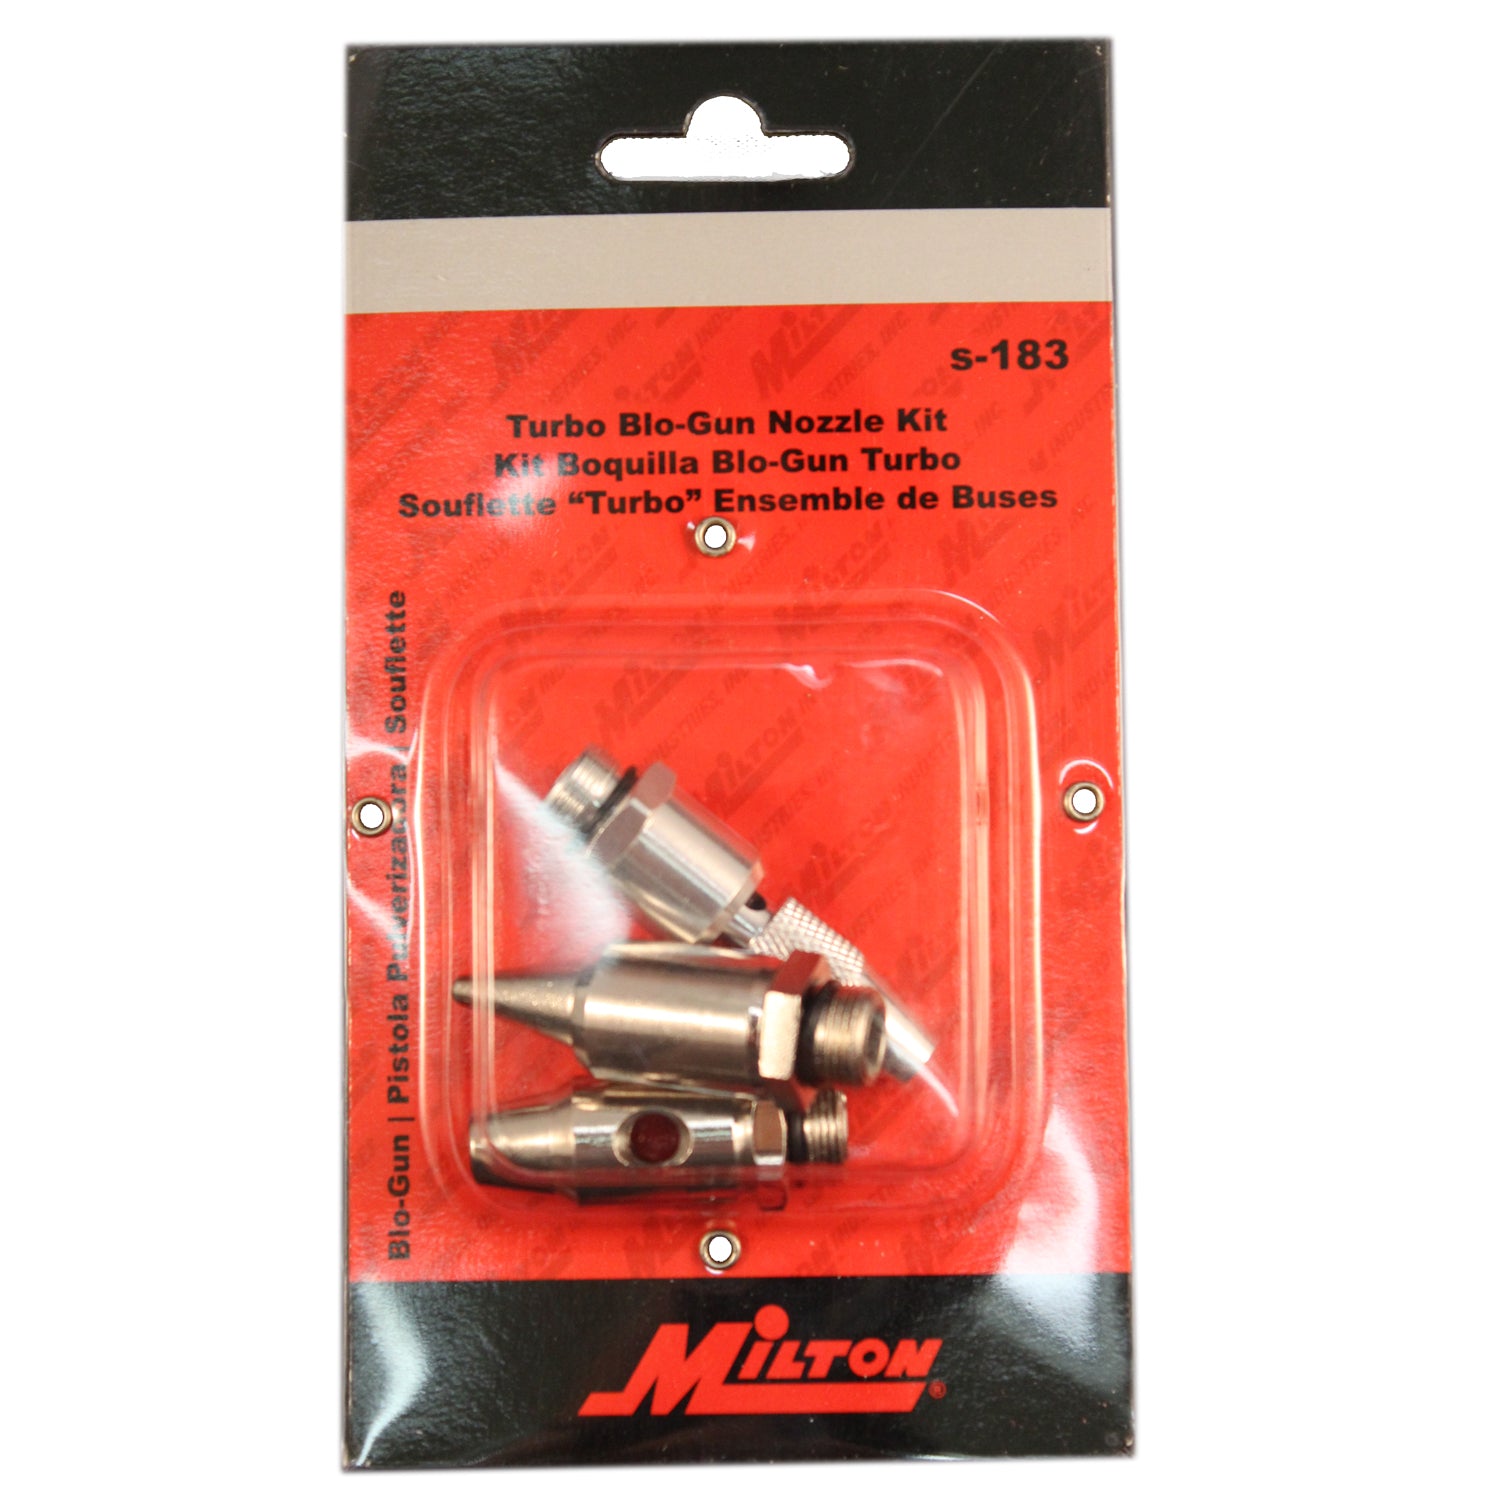 Turbo Blow Gun Nozzle Kit (3-Piece)